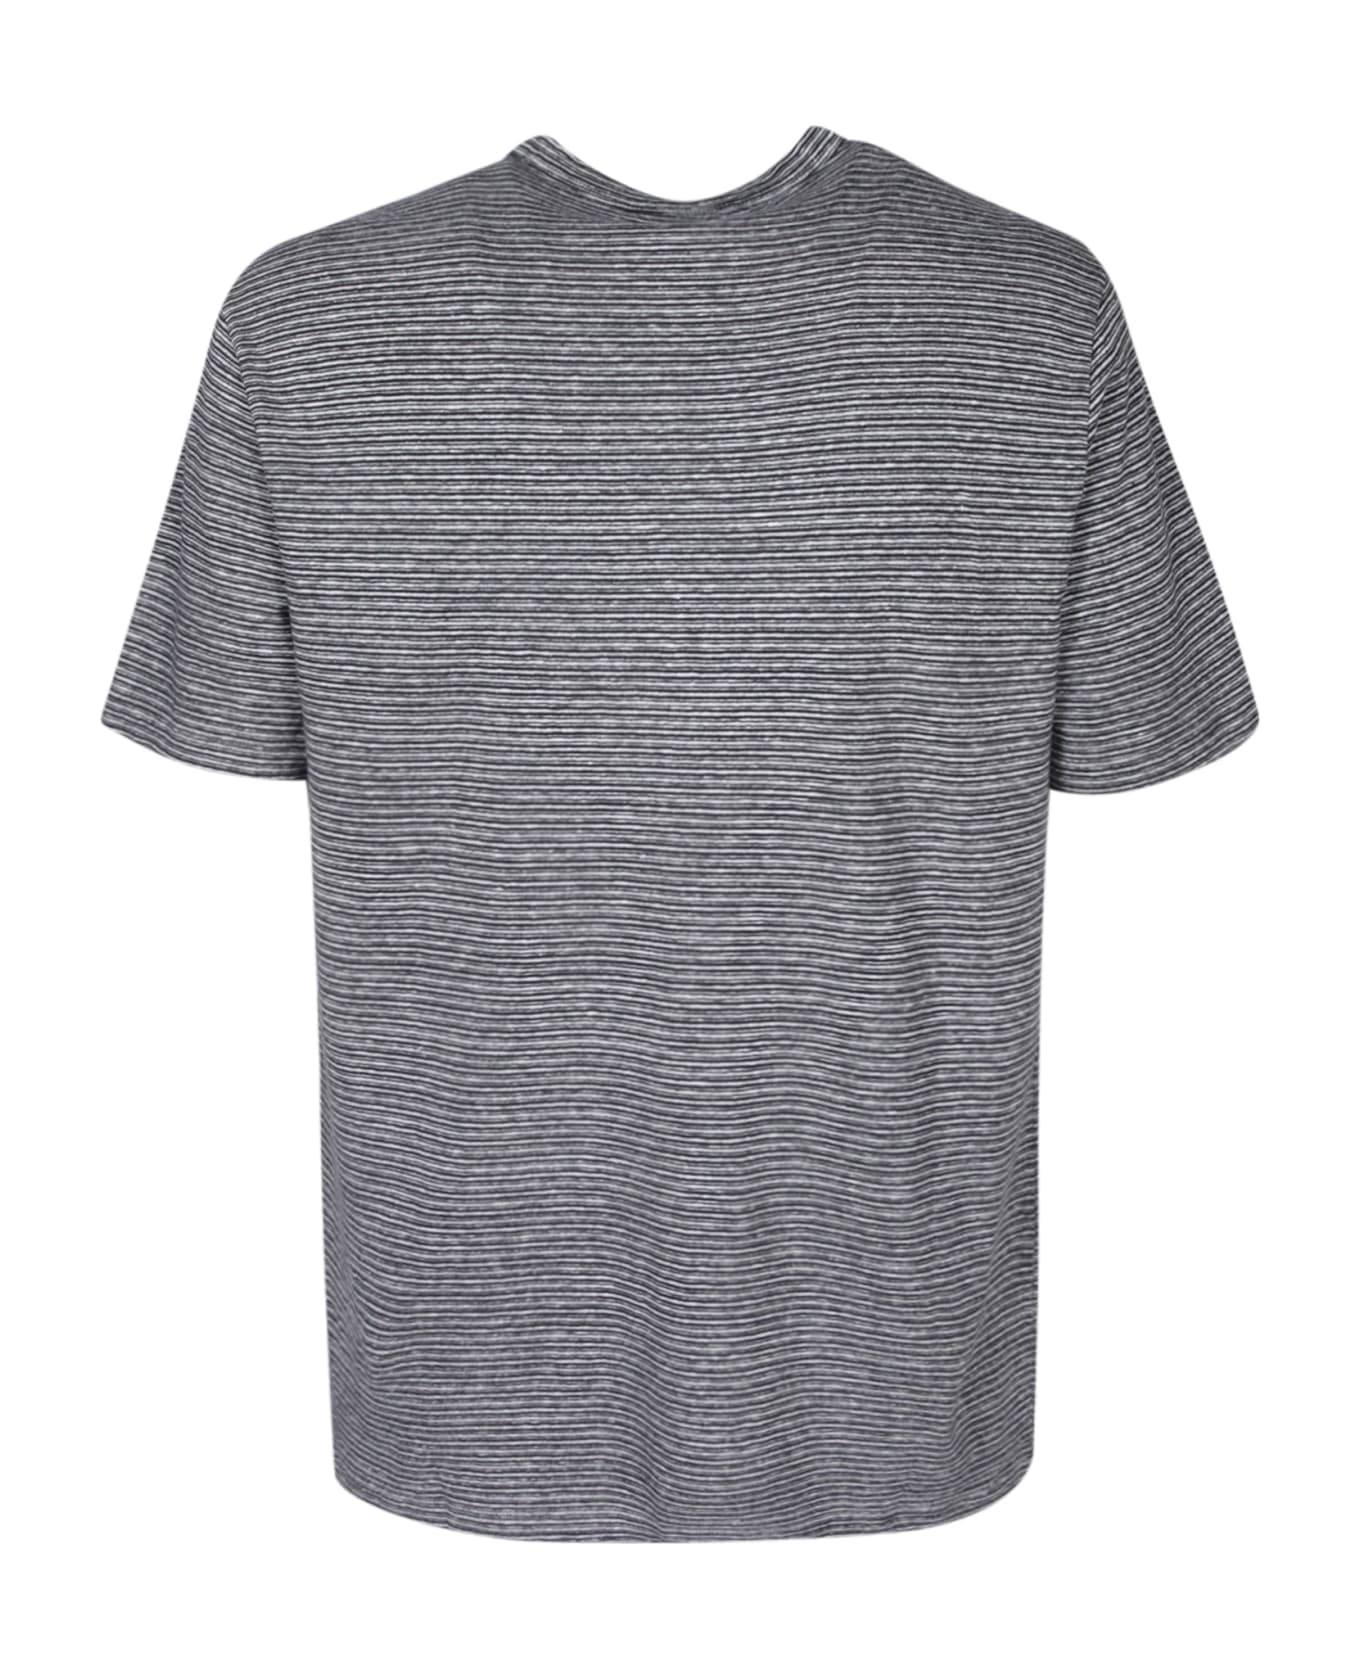 Officine Générale Short Sleeves Ecru/black Polo Shirt - Beige